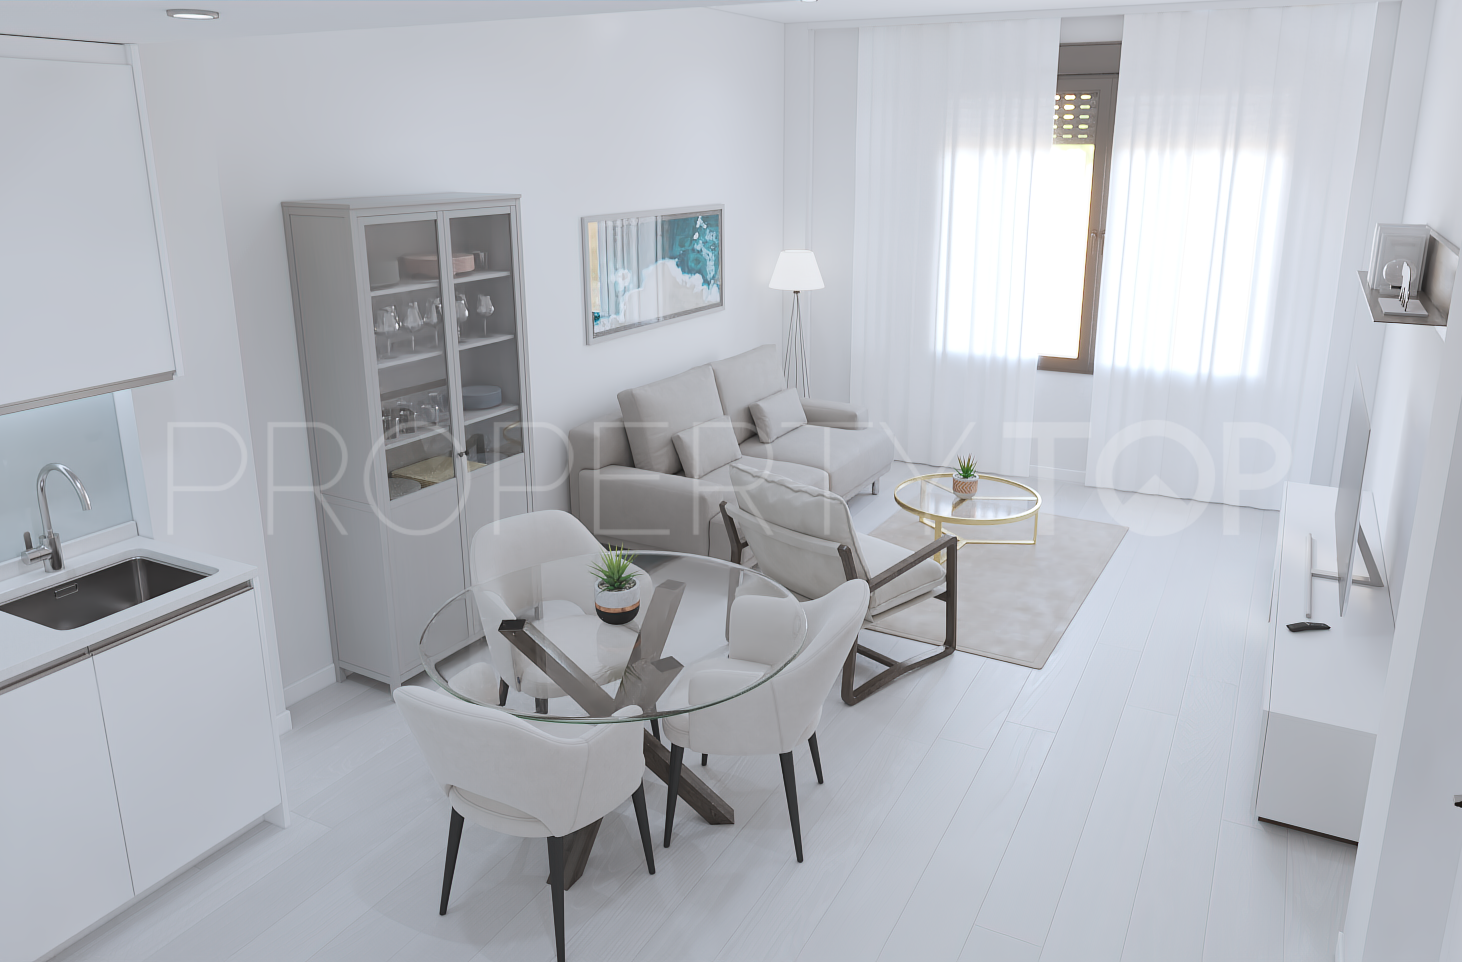 Fuengirola Centro ground floor apartment for sale